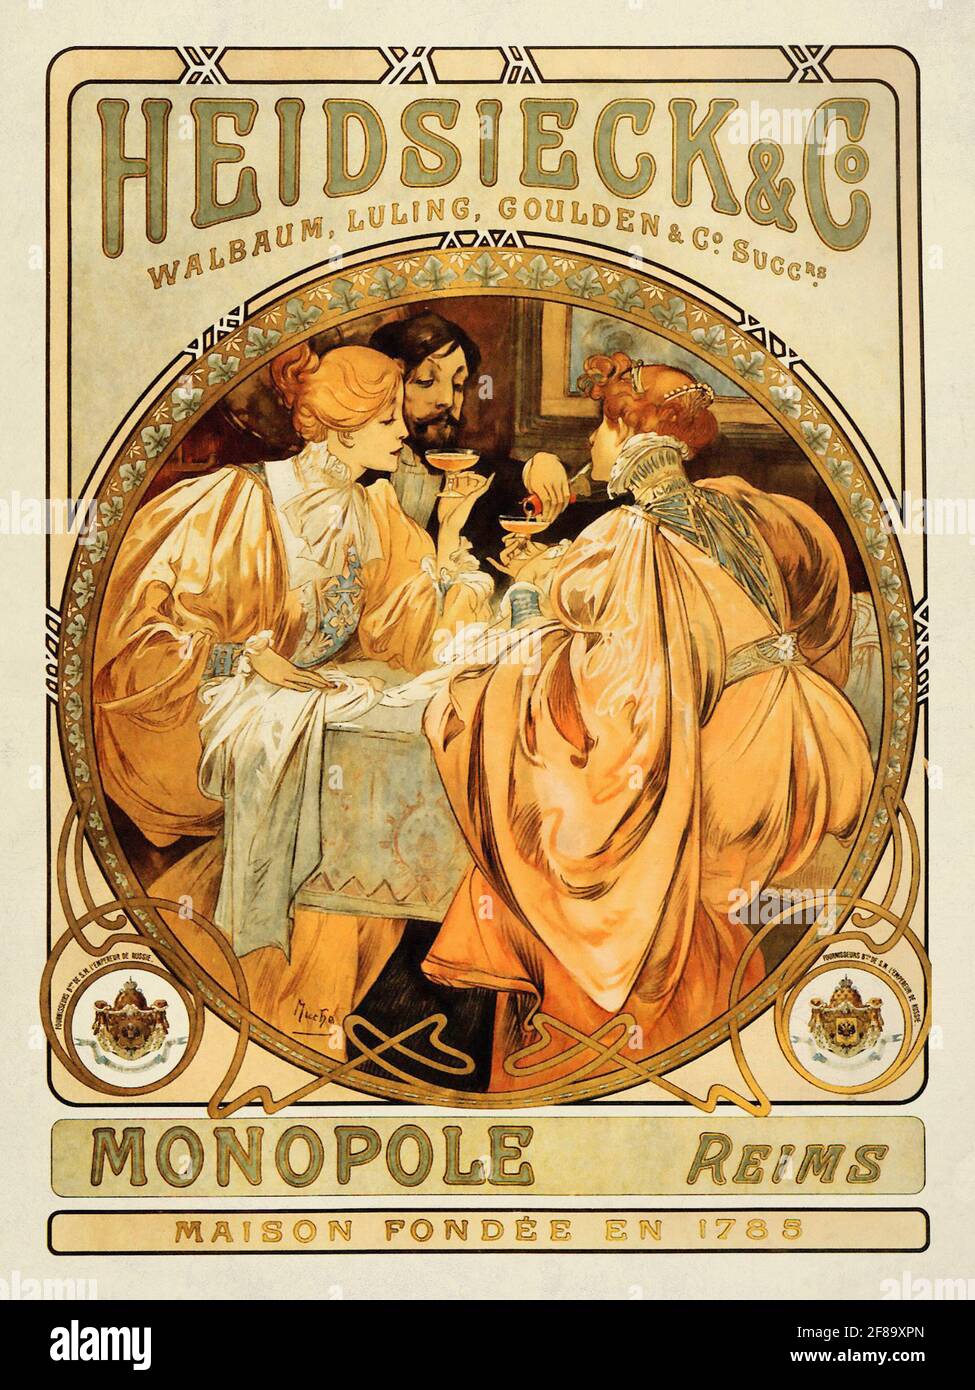 Heidsieck & Co, Monopole, Reims ad – Art Nouveau di Alphonse Mucha Foto Stock